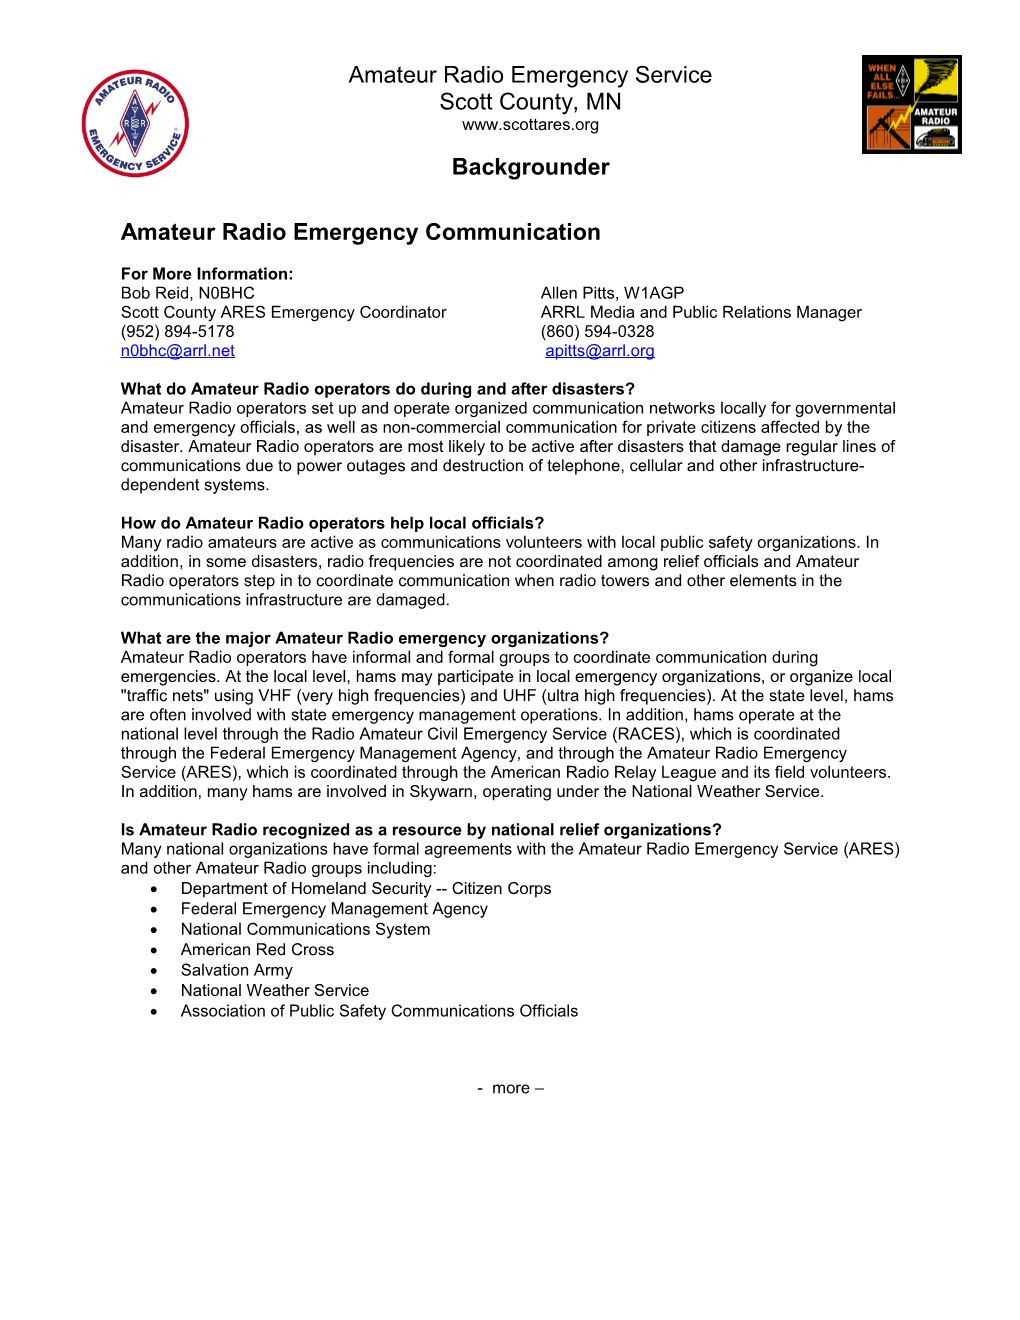 Amateur Radio Emergency Service s1